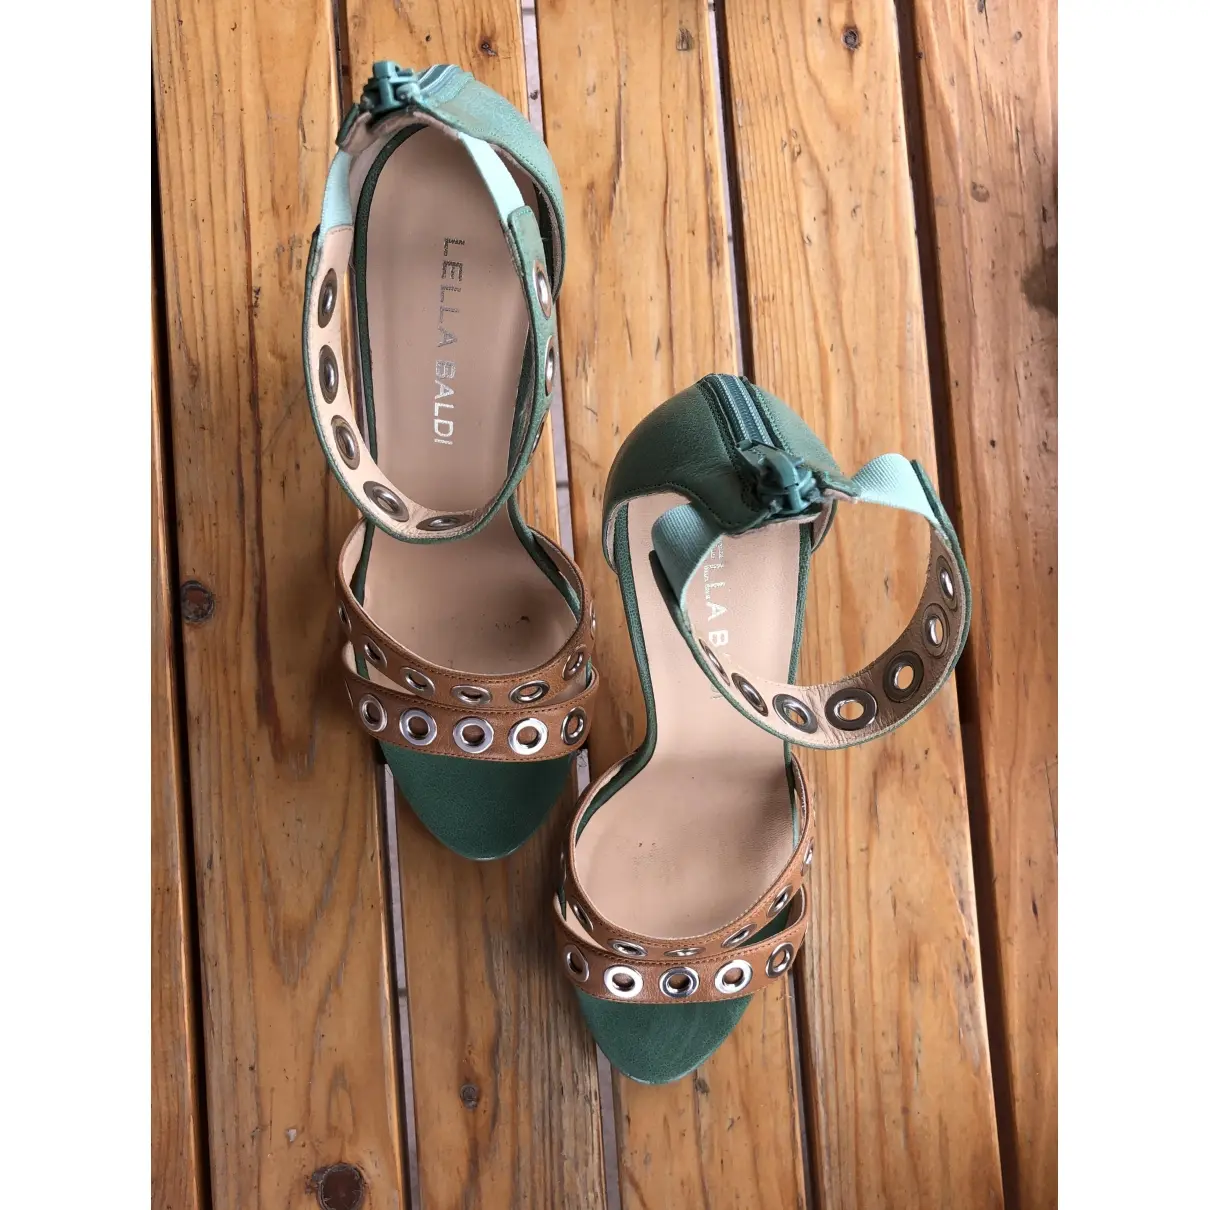 Buy Lella Baldi Leather heels online